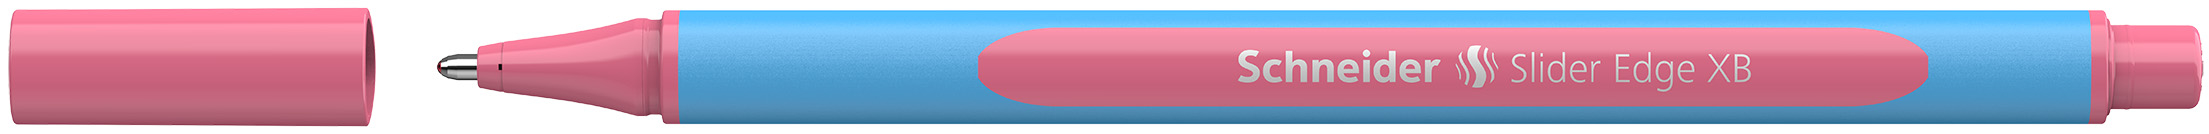 SCHNEIDER Stylo Slider Edge 0.7mm 004384-222 pastel flamingo